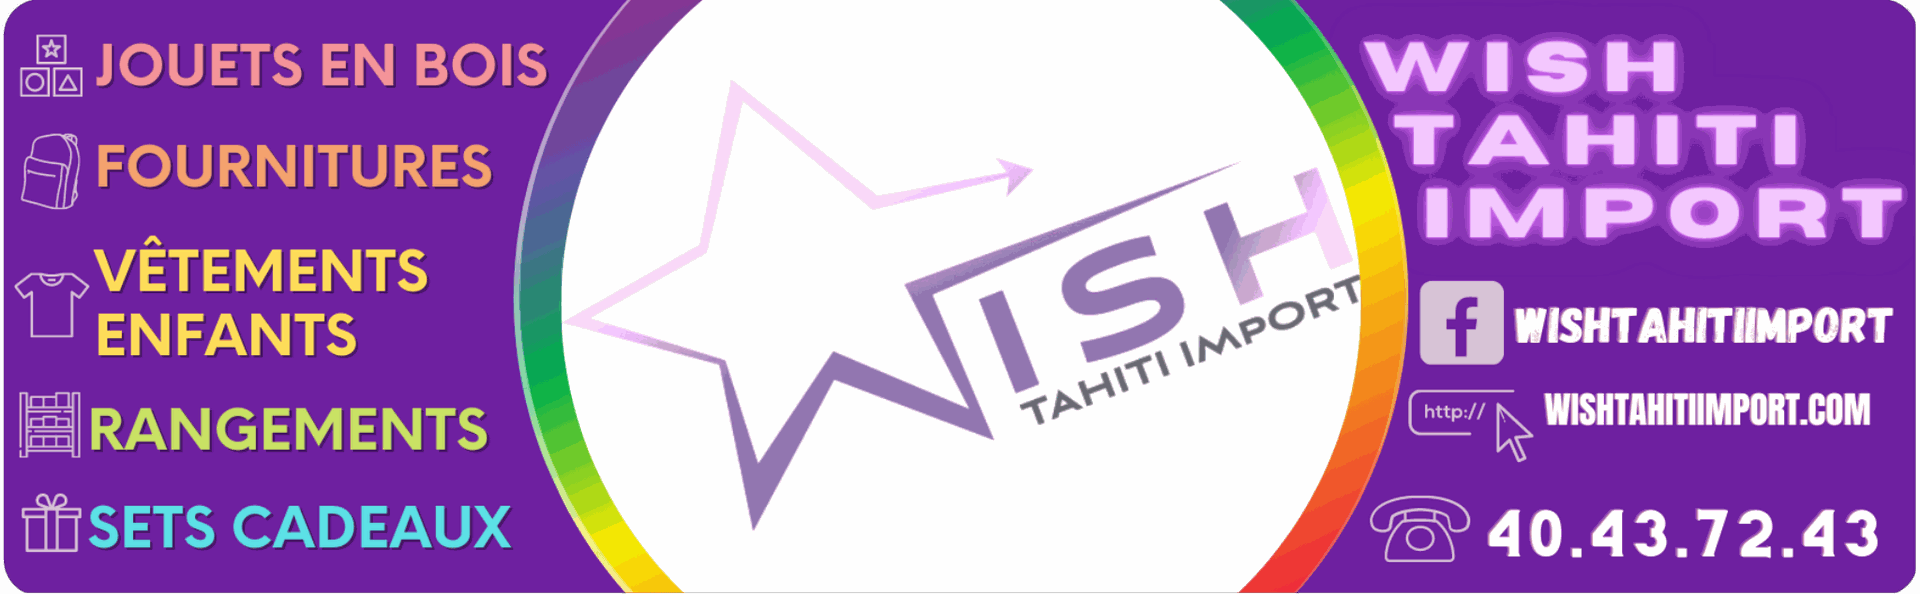 WISH TAHITI IMPORT